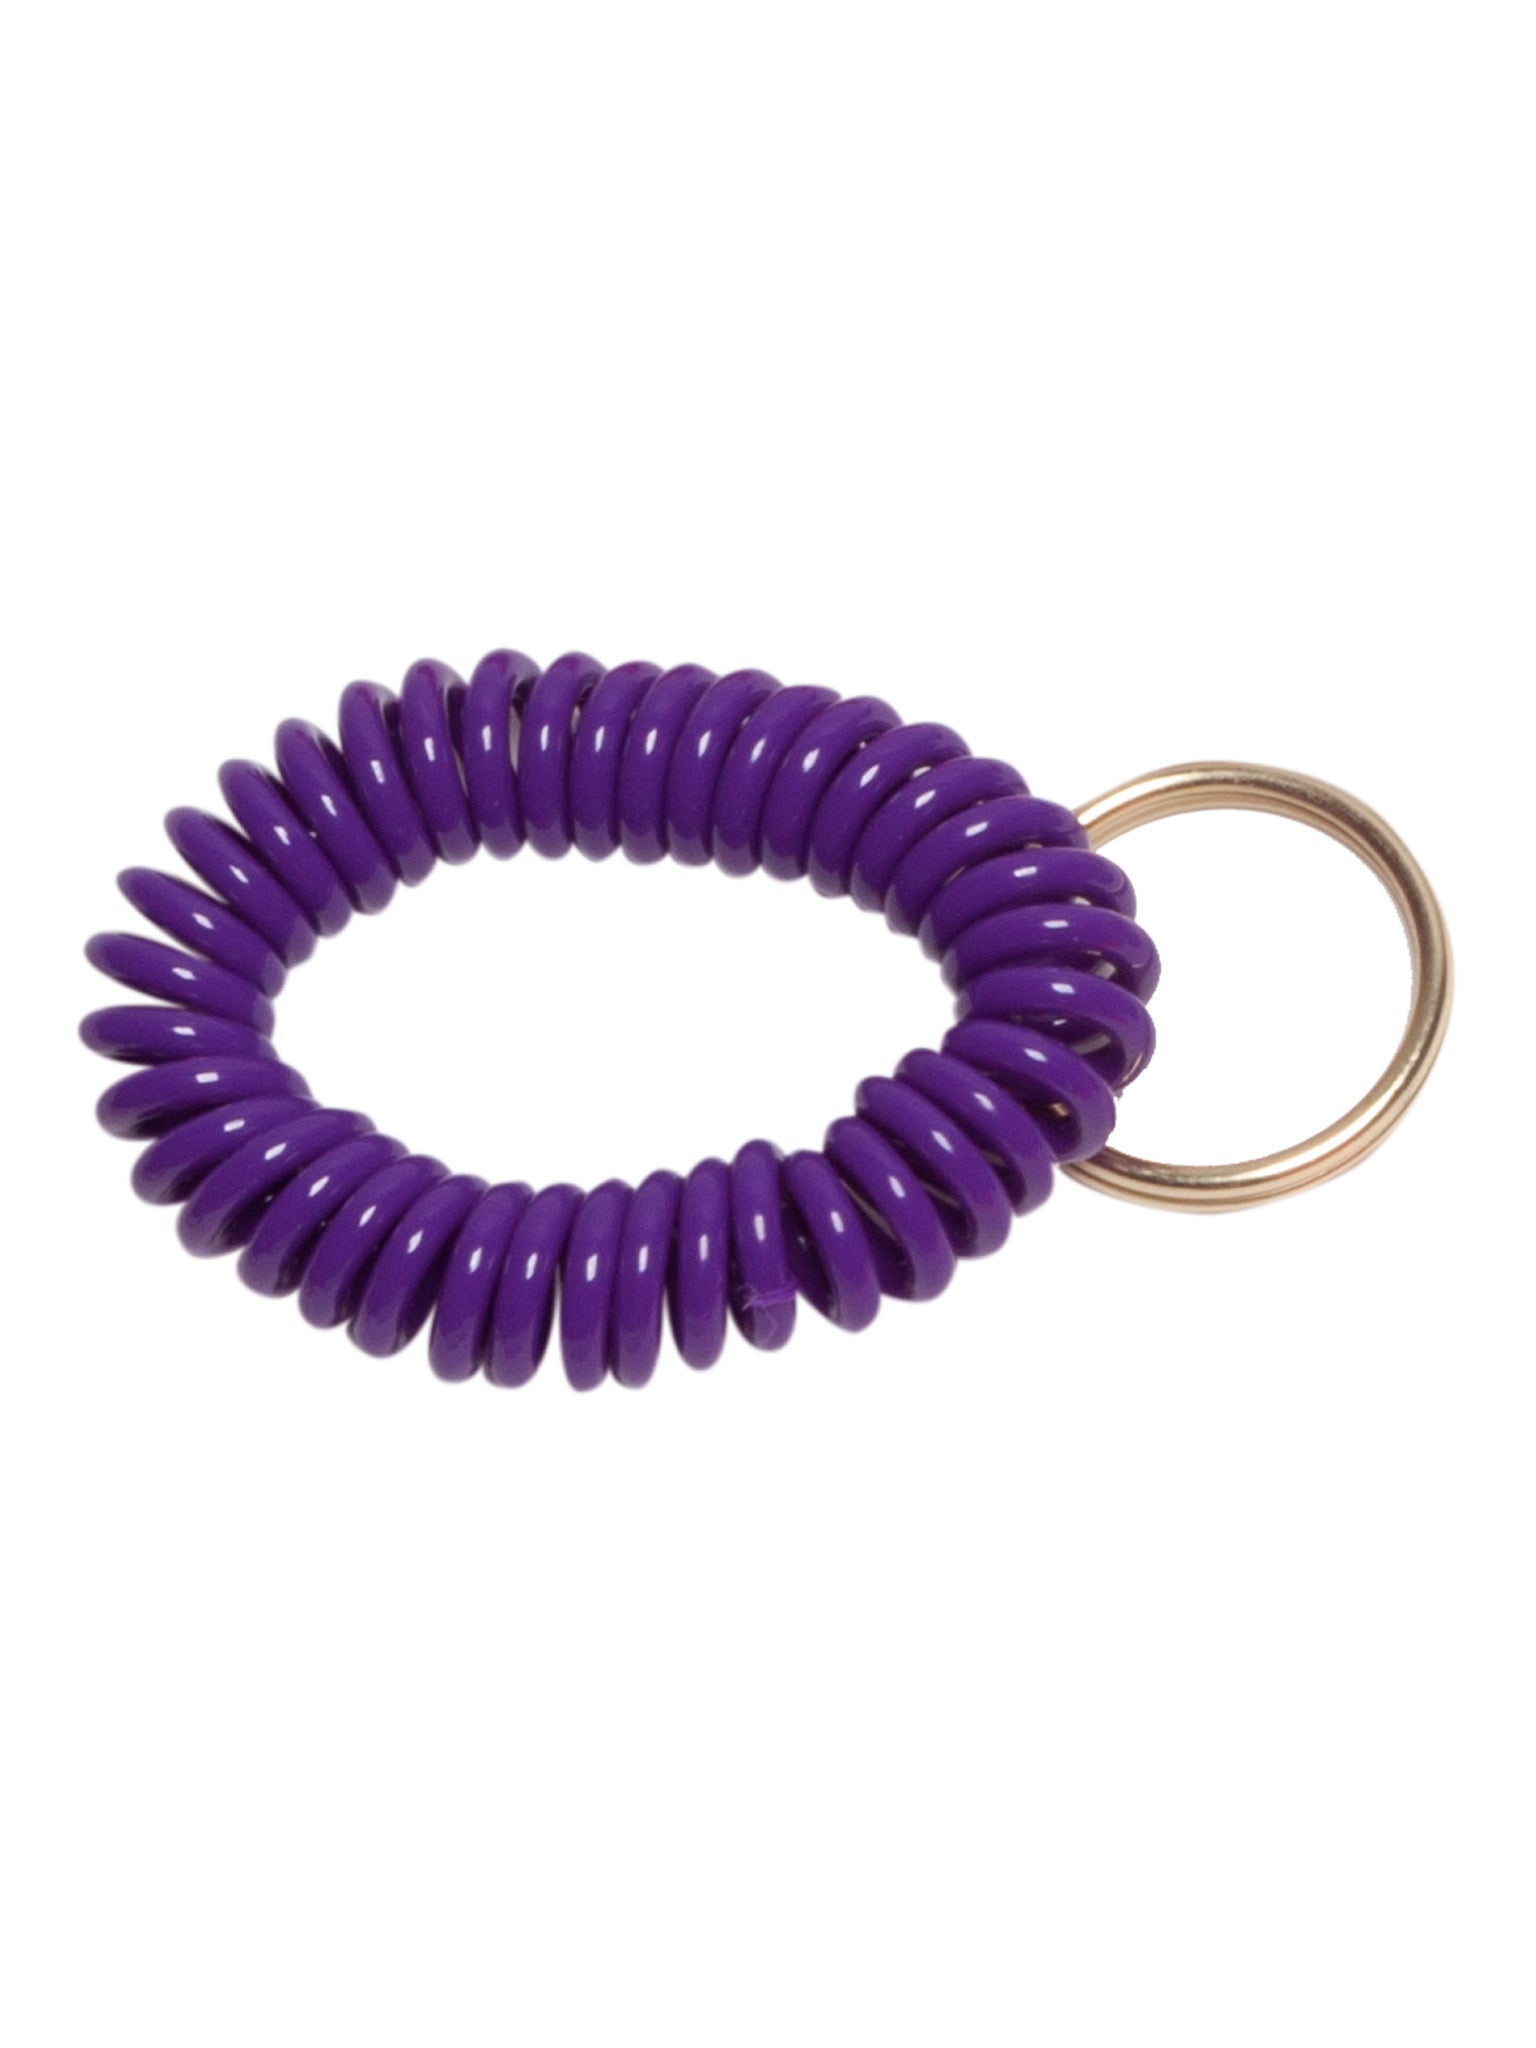 Spiral Bracelets For Whistle - Purple